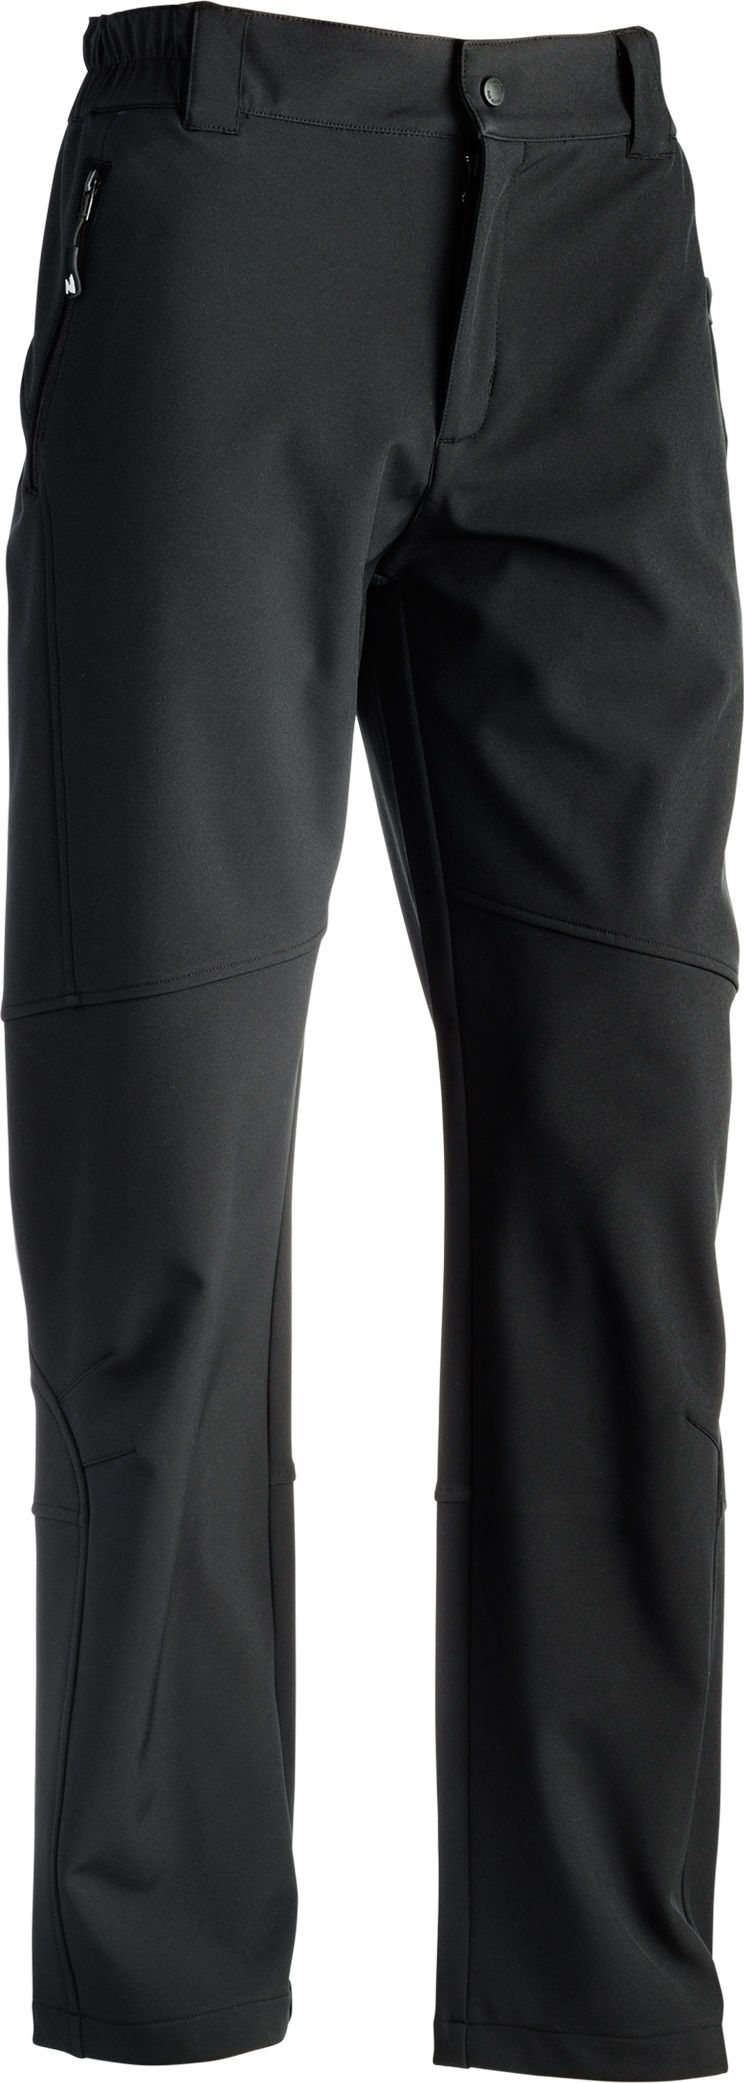 Брюки NorthSky Wynn softshell pants w black - фото 1